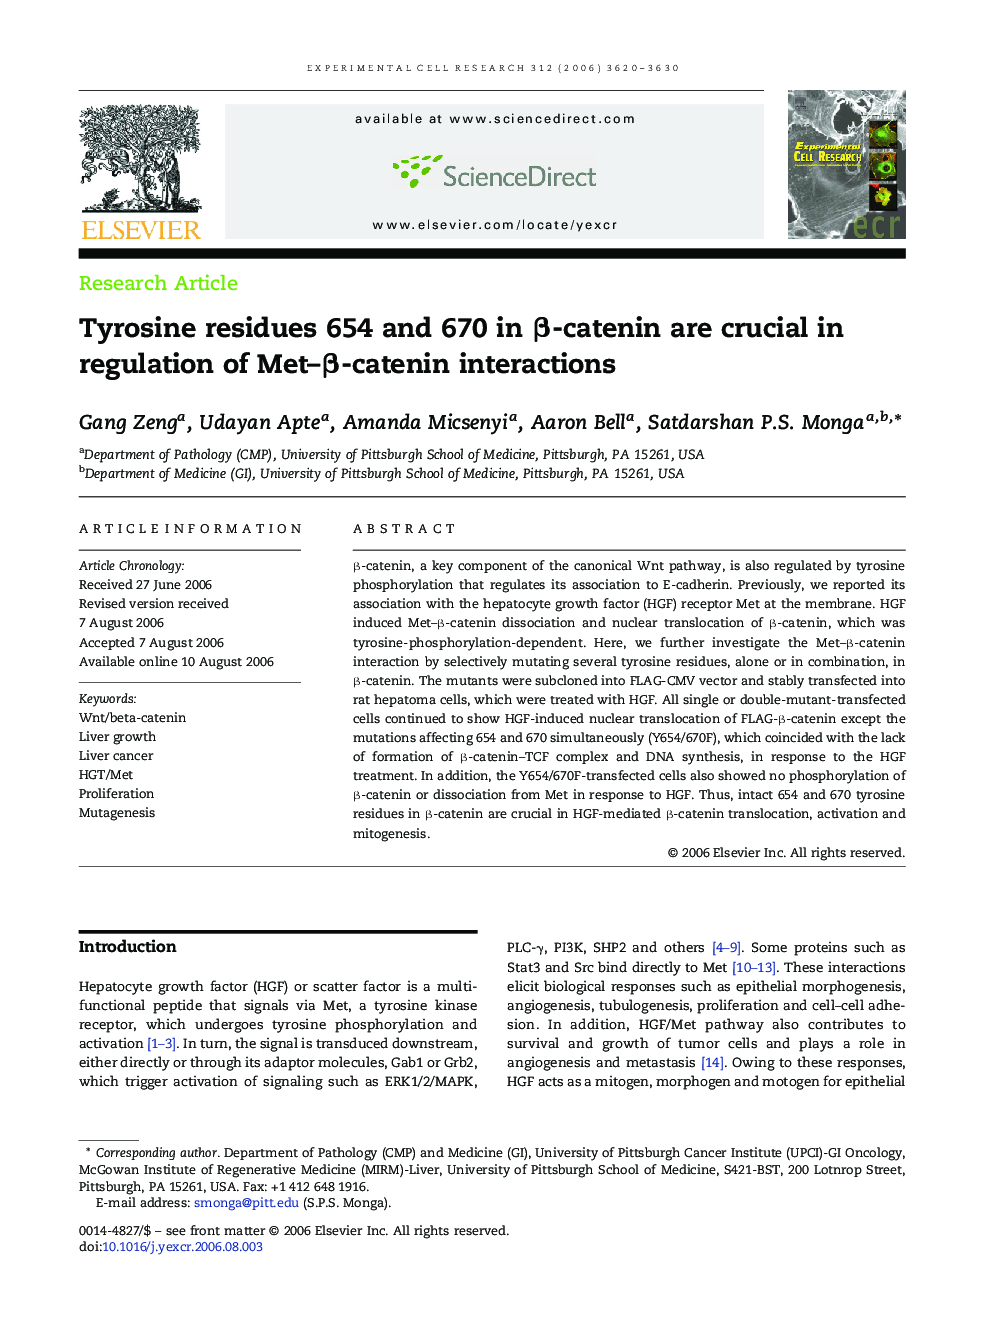 Tyrosine residues 654 and 670 in β-catenin are crucial in regulation of Met–β-catenin interactions